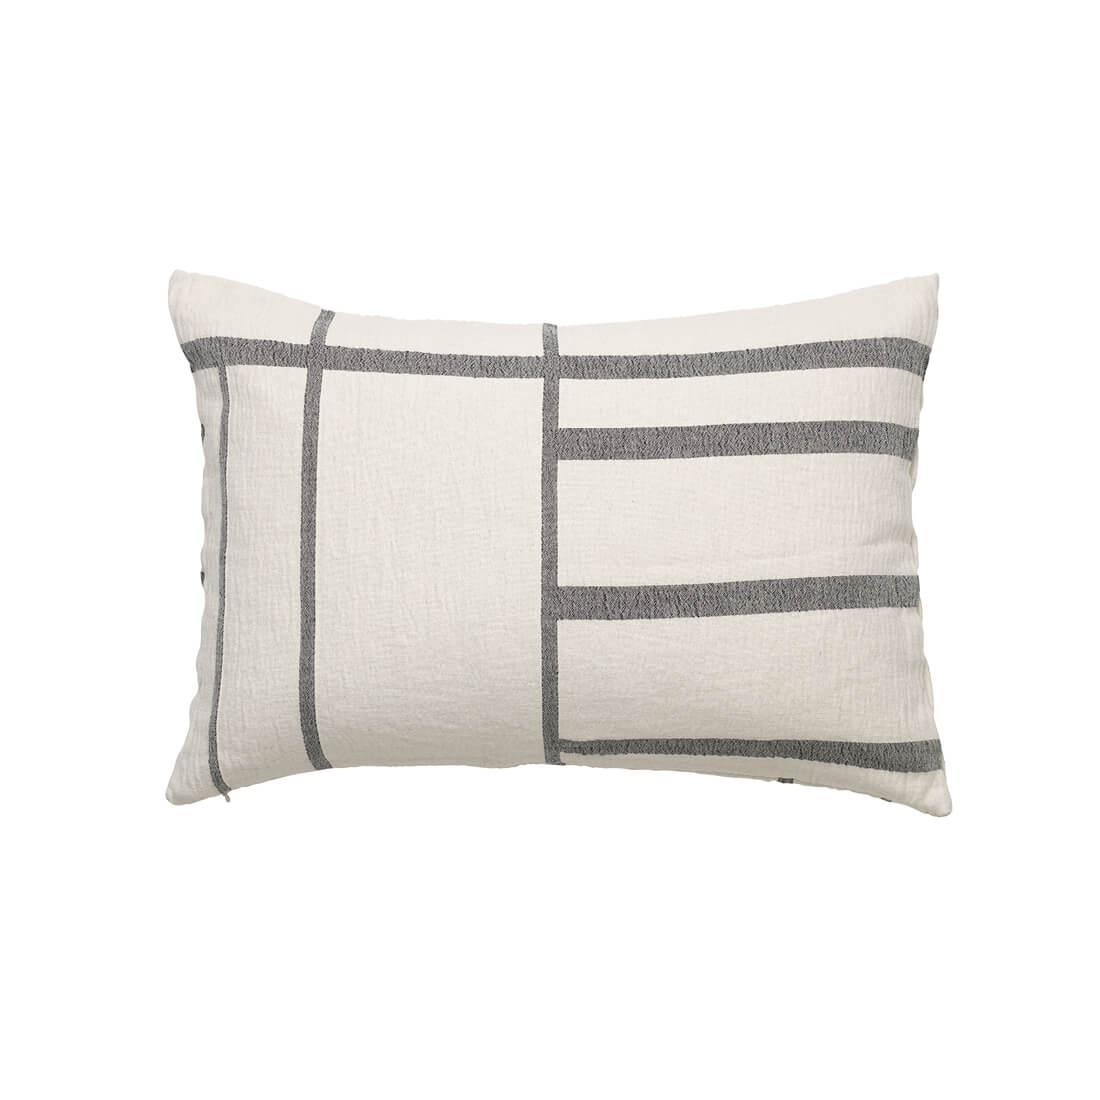 Architectural Pillow | Off-white/black melange